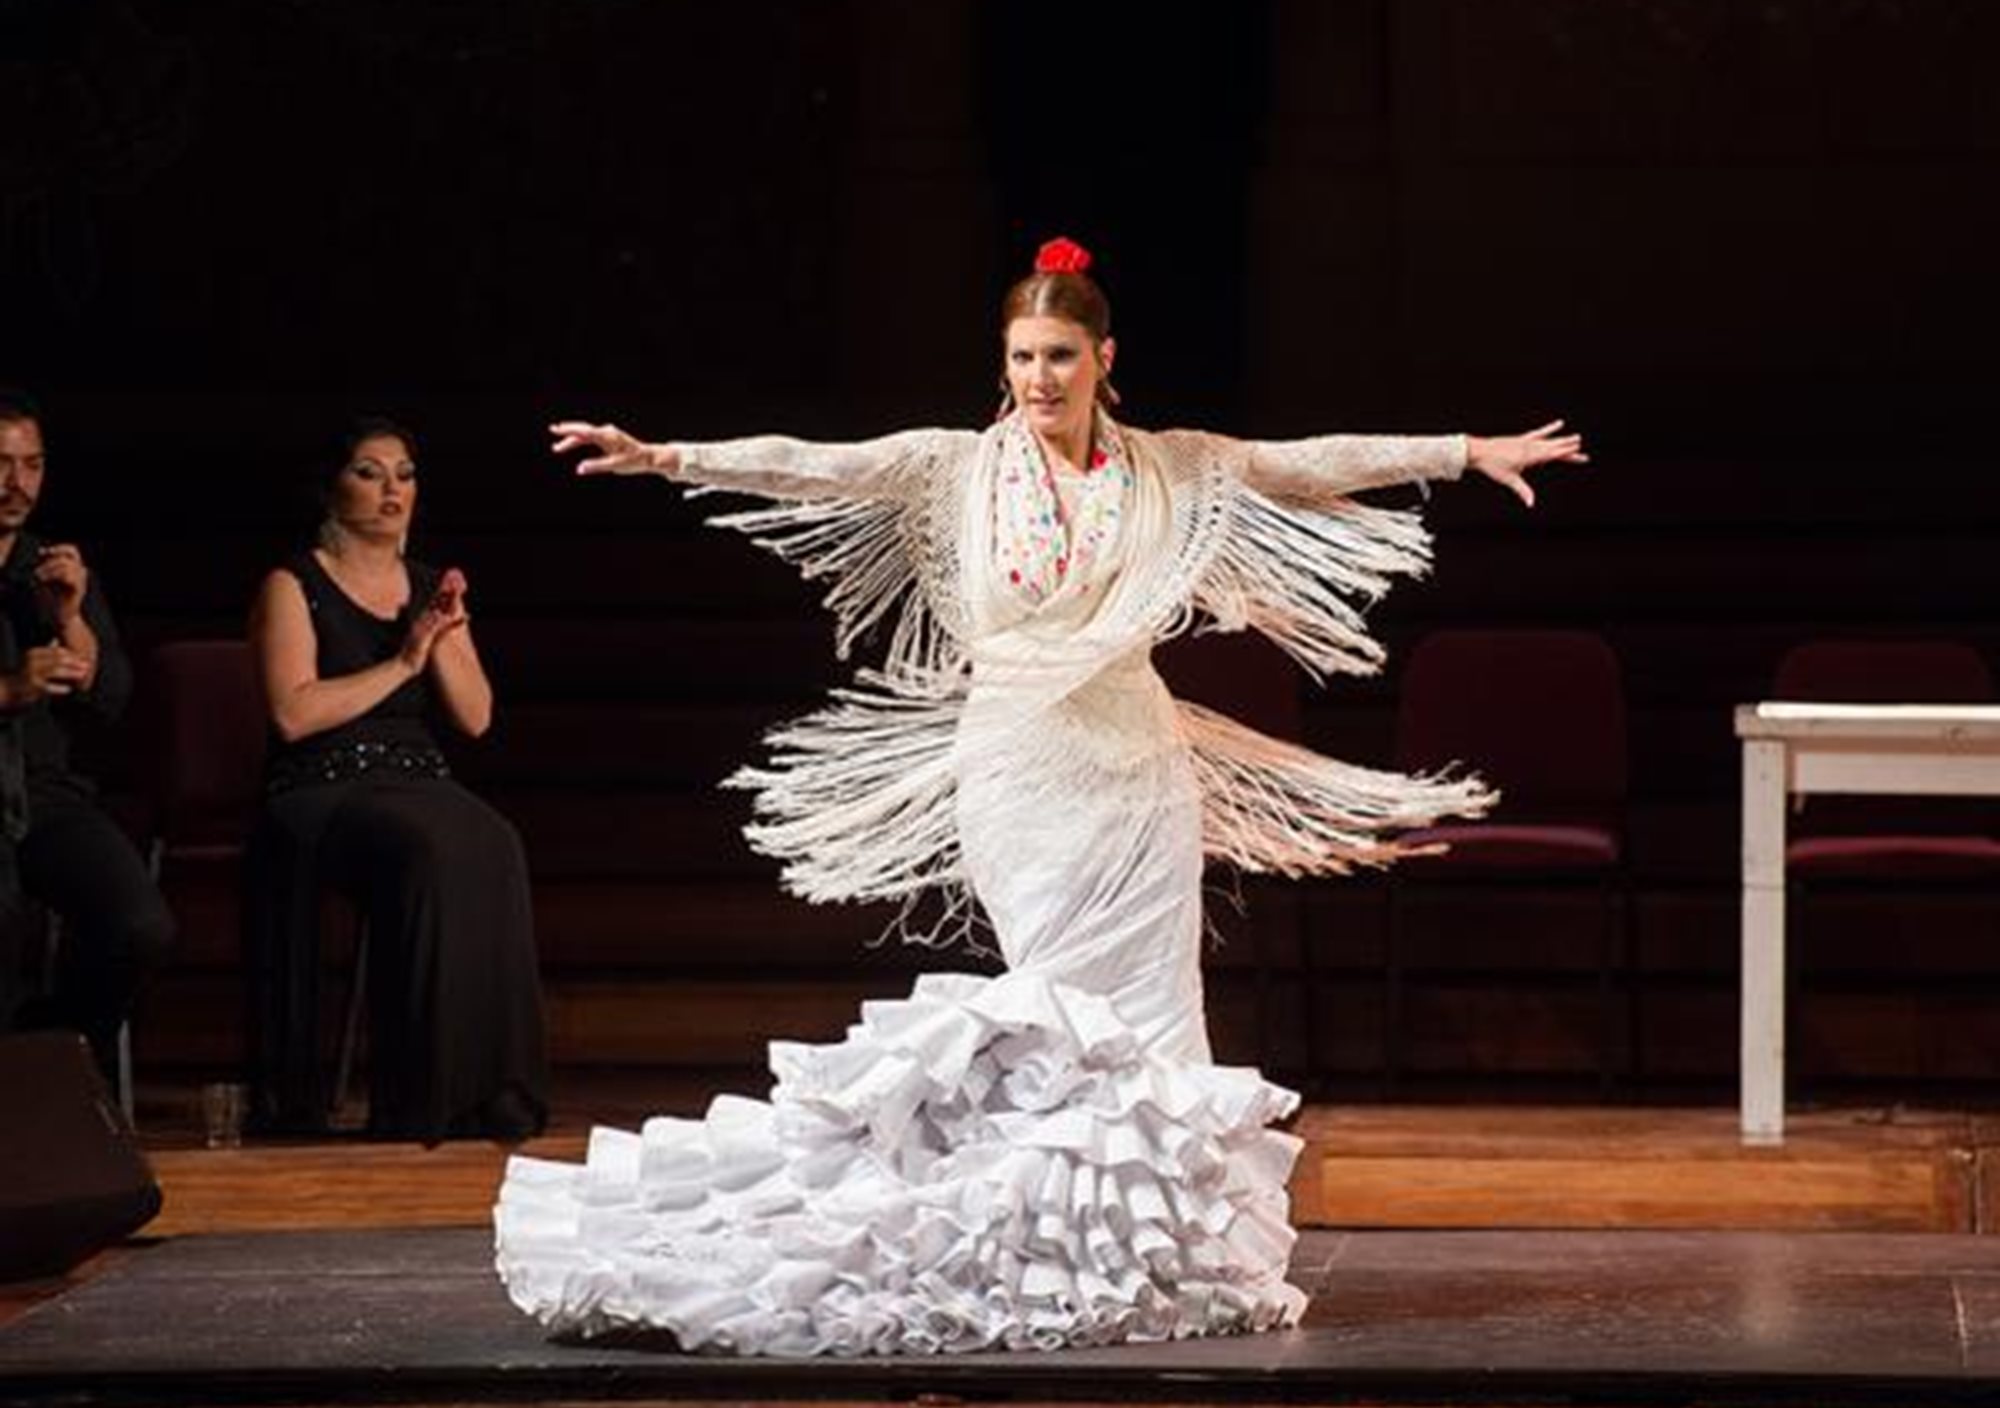 reservieren kaufen buchung tickets besucht Touren Fahrkarte Show Gran Gala Flamenco in Palau de la Musica